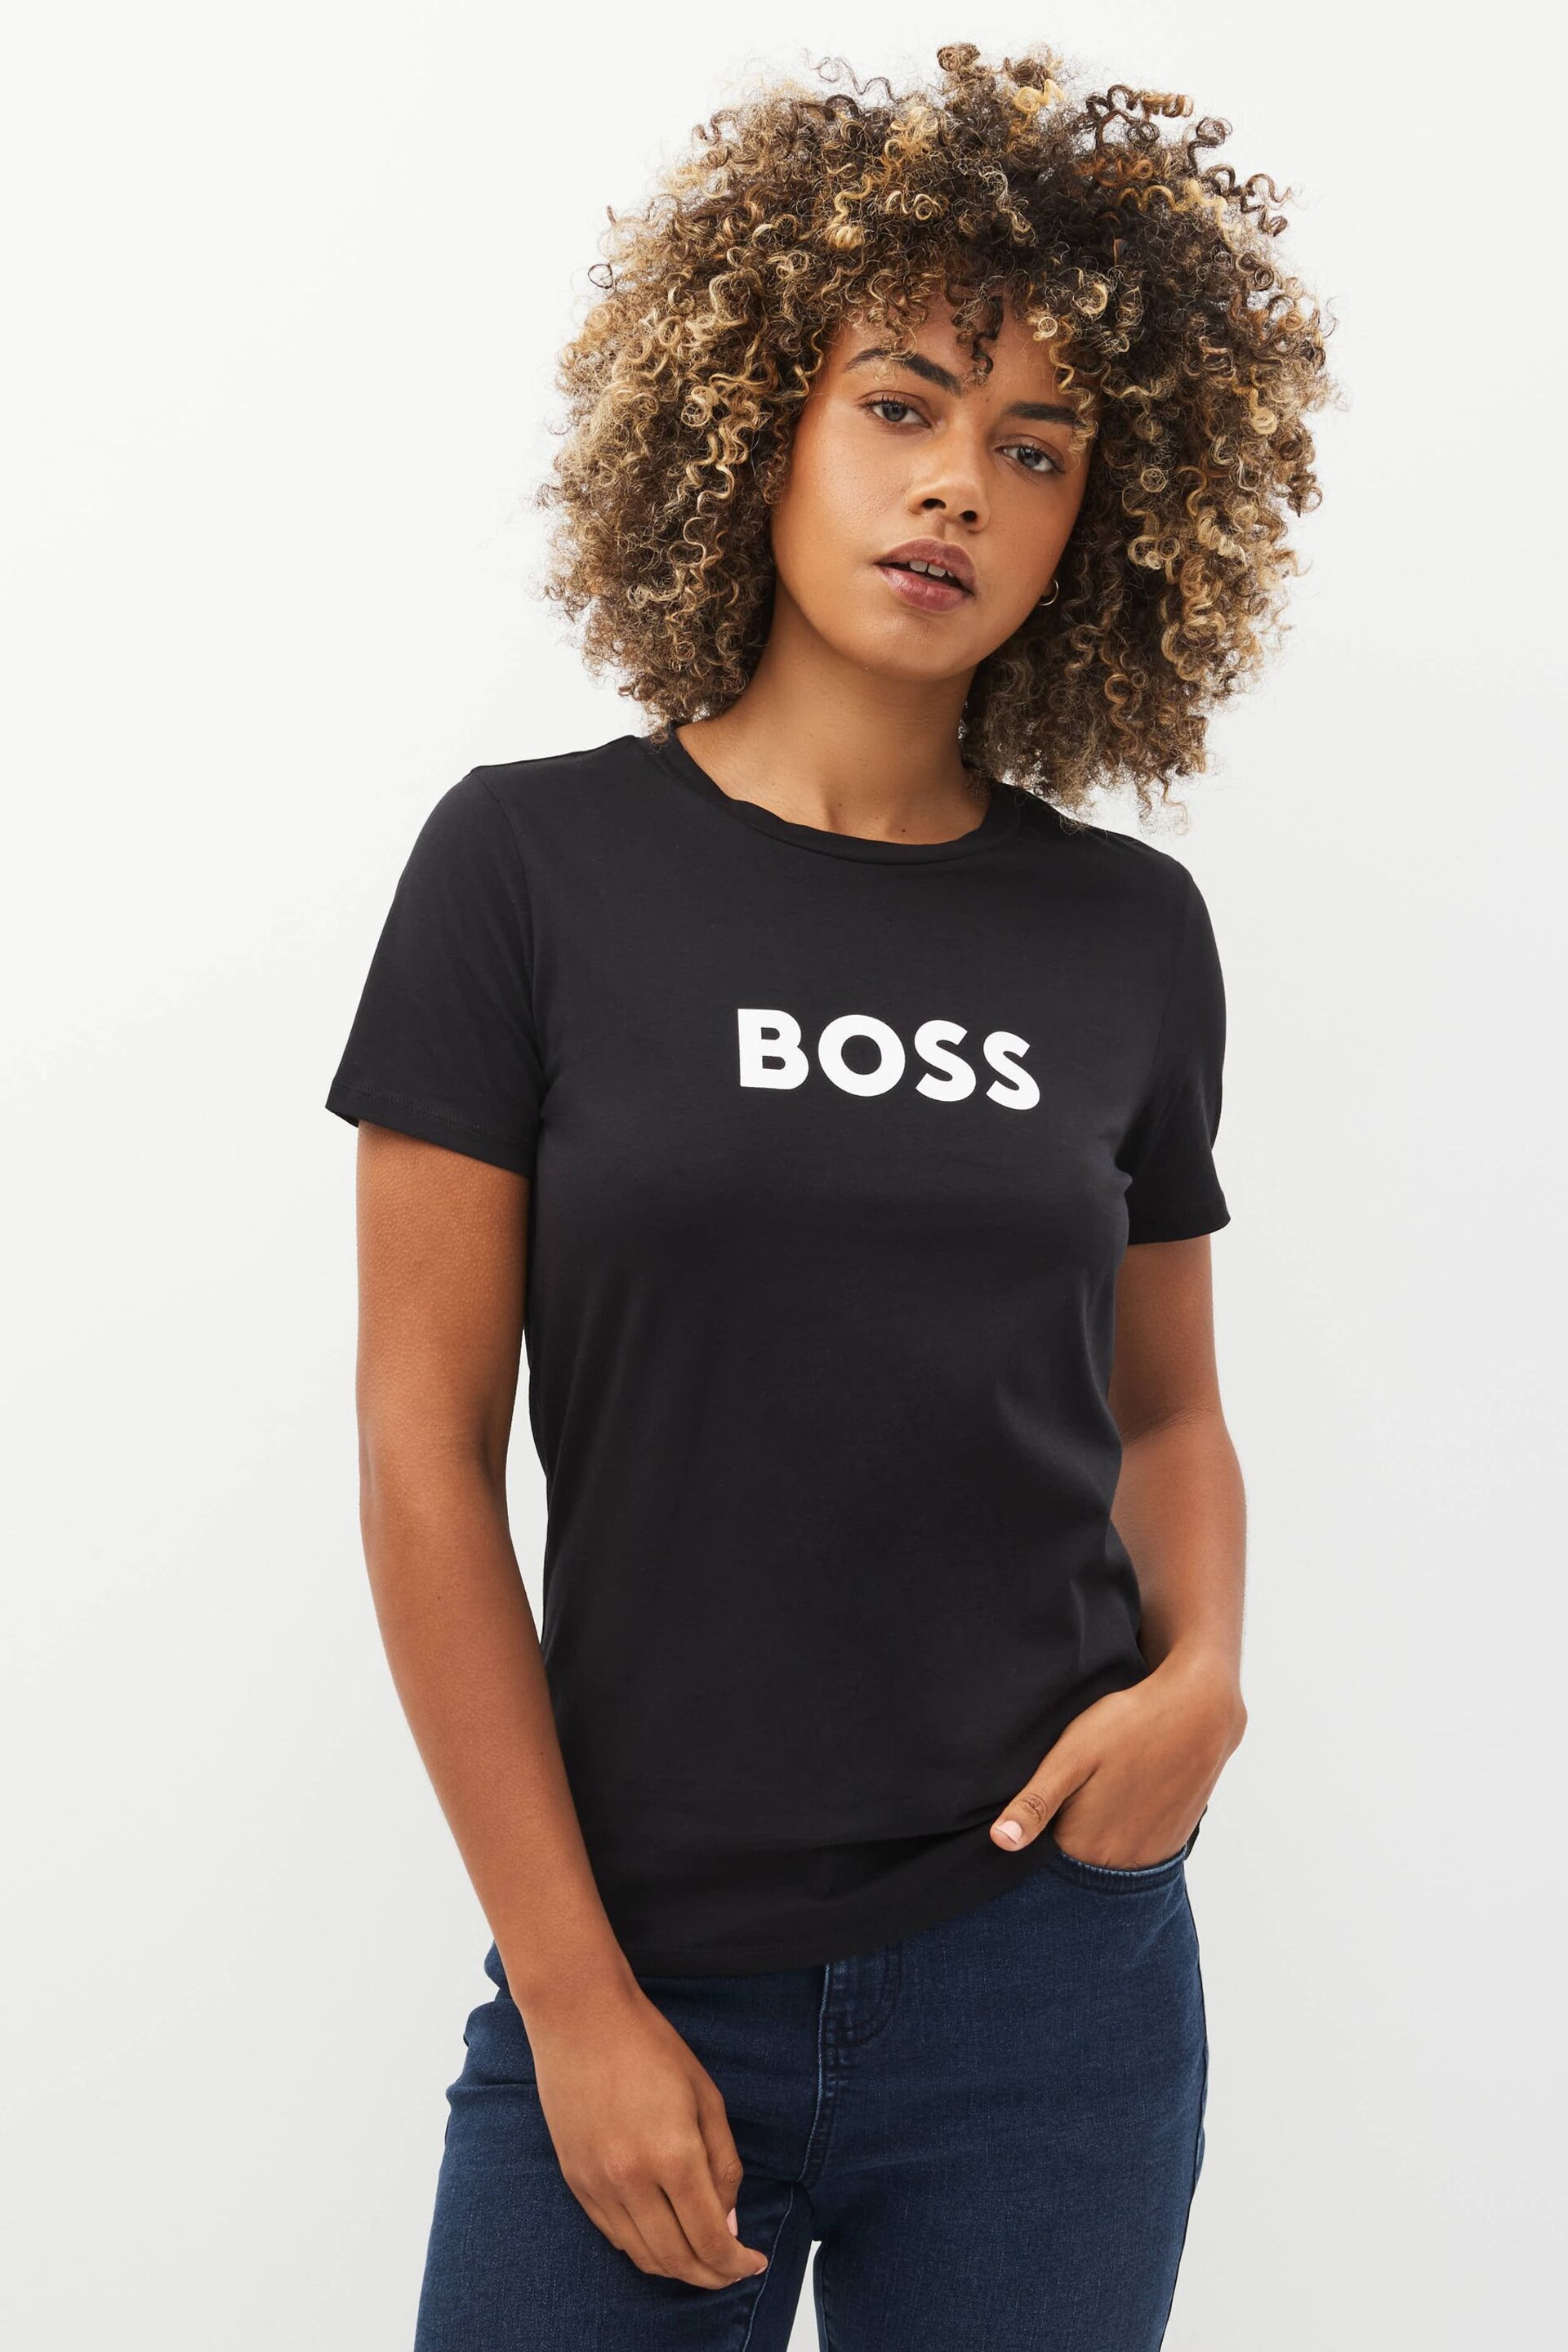 BOSS Black Logo Print T-Shirt - Image 1 of 4